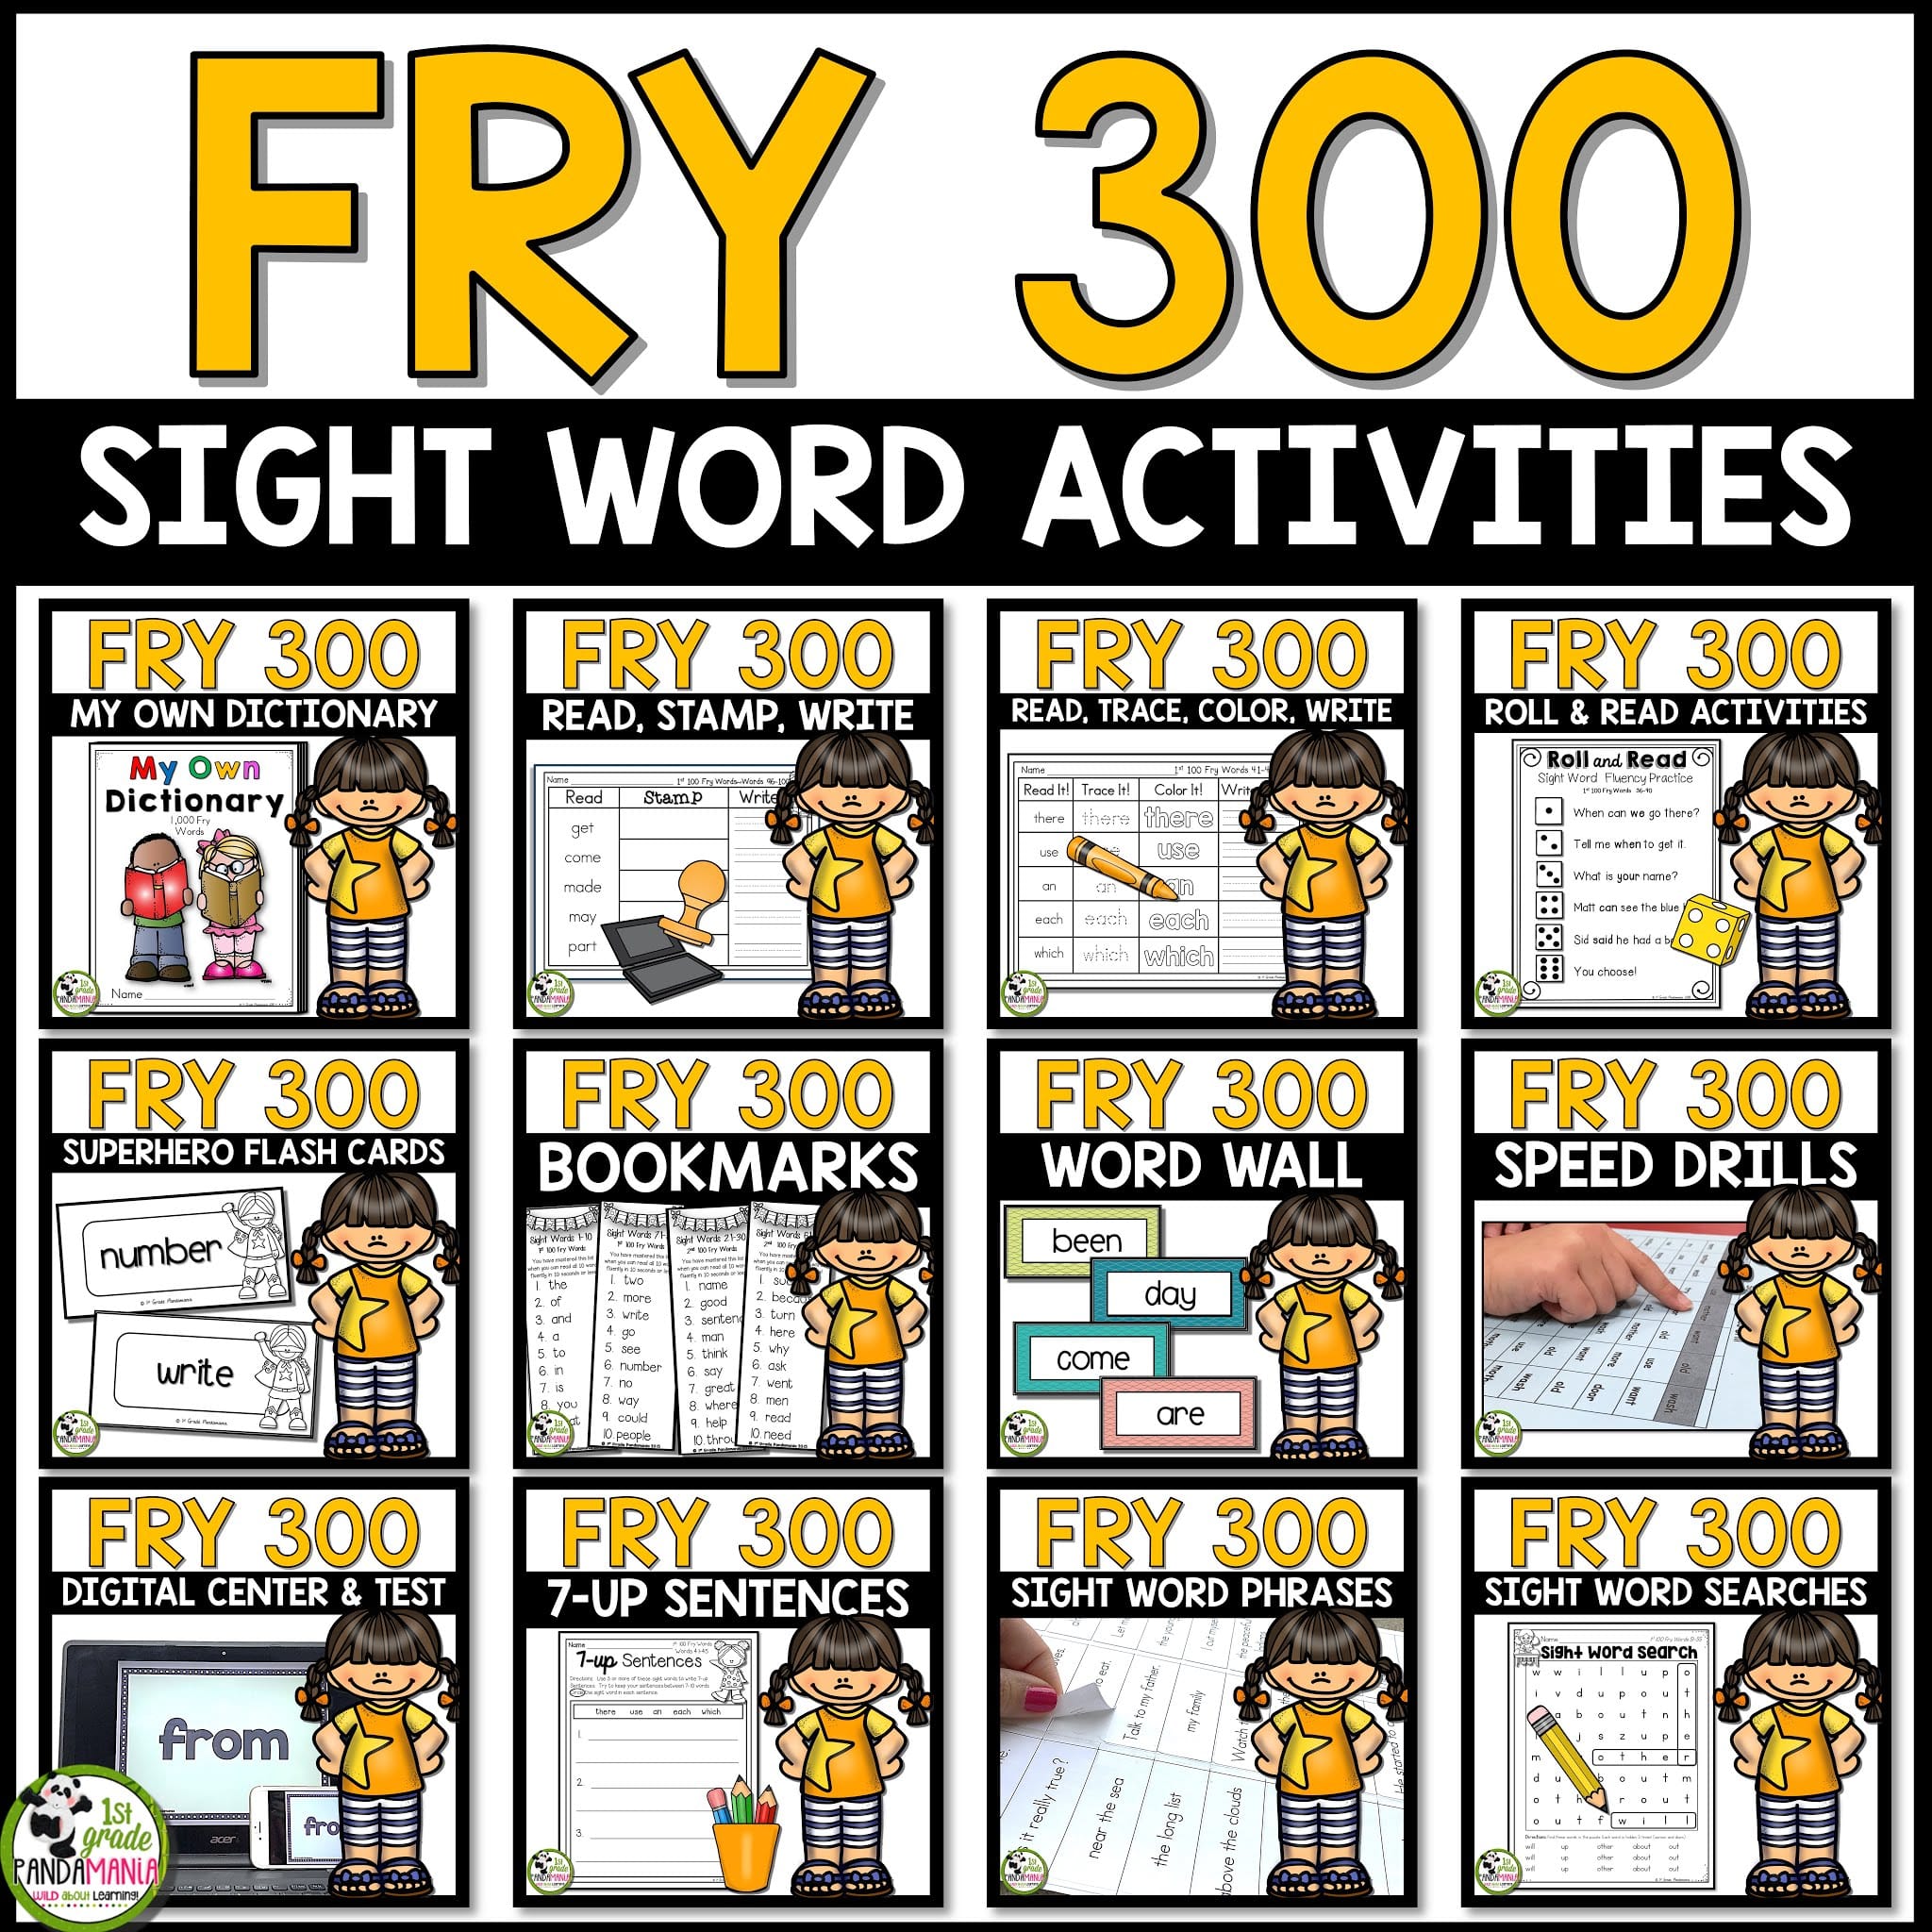 16 Helpful Ways to Build Sight Word SMARTS 16